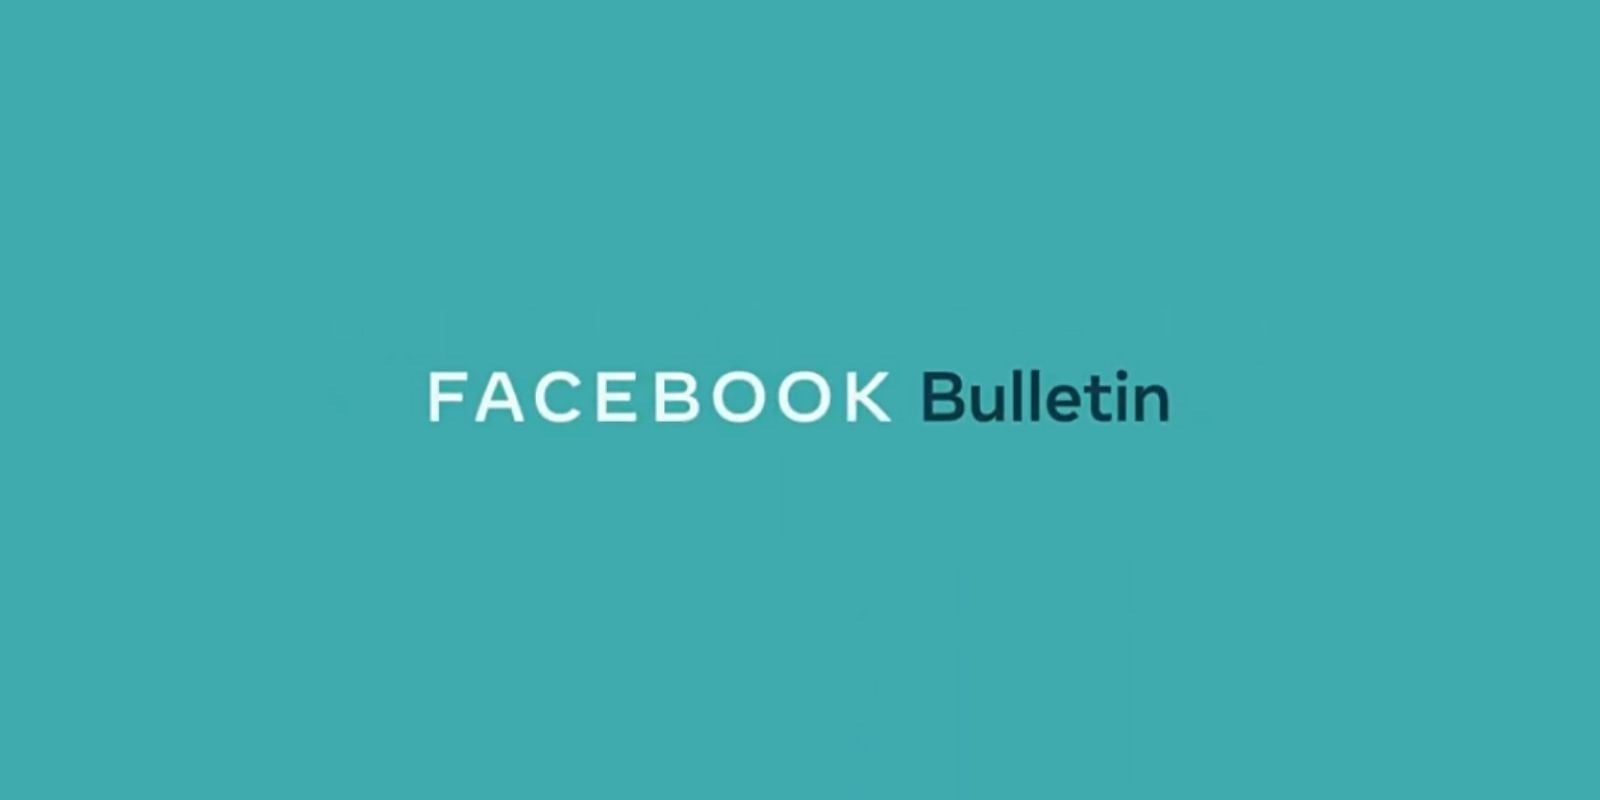 Facebook Introduces Its Newsletter Platform, Bulletin